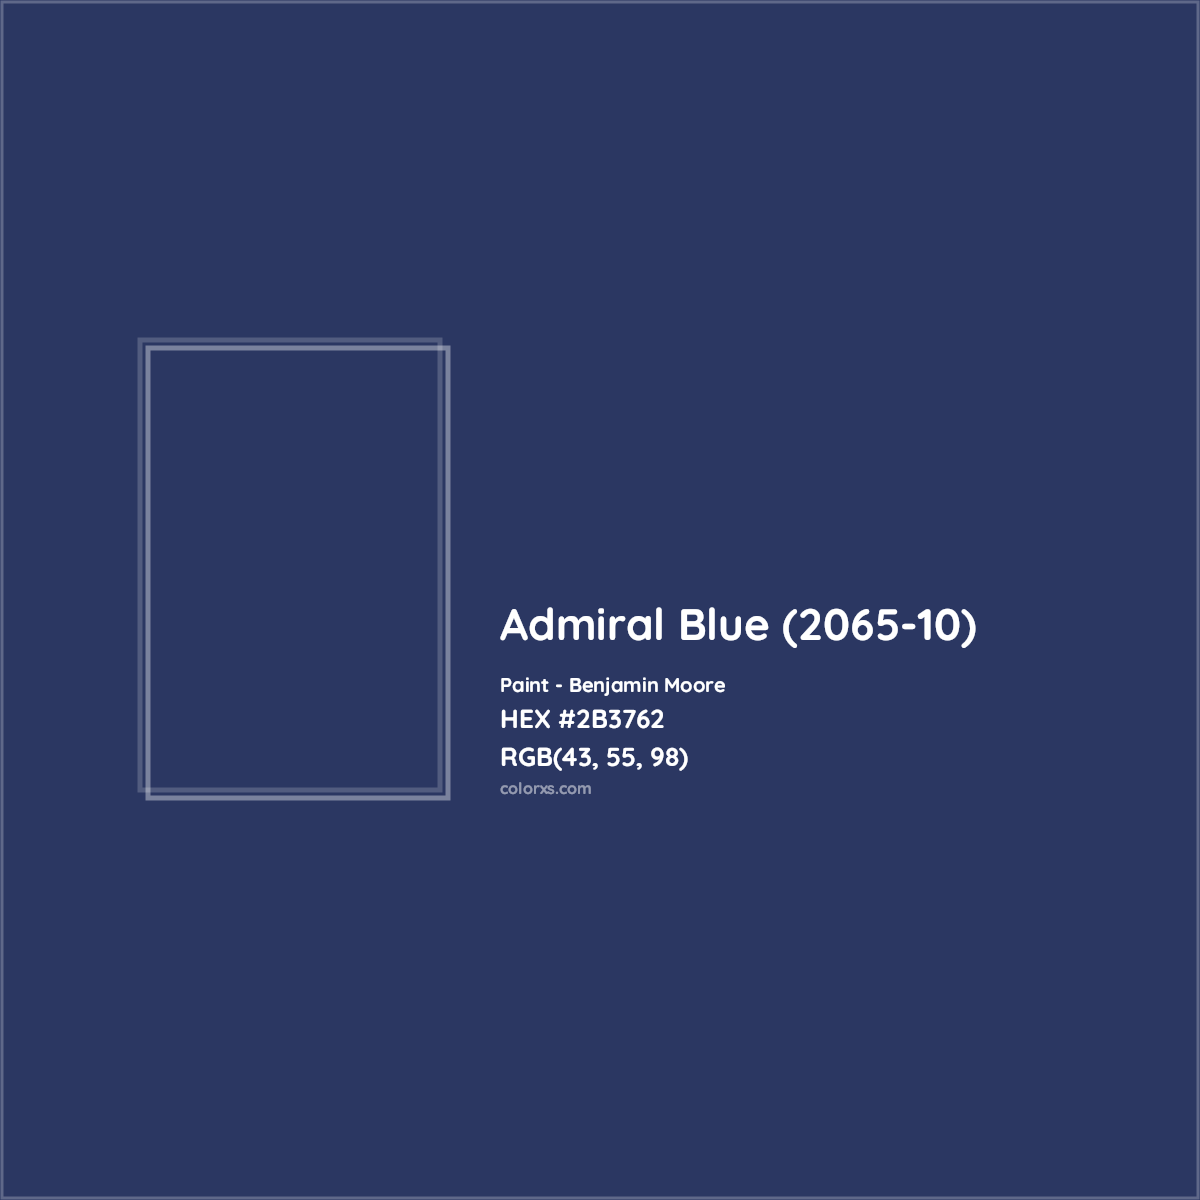 HEX #2B3762 Admiral Blue (2065-10) Paint Benjamin Moore - Color Code